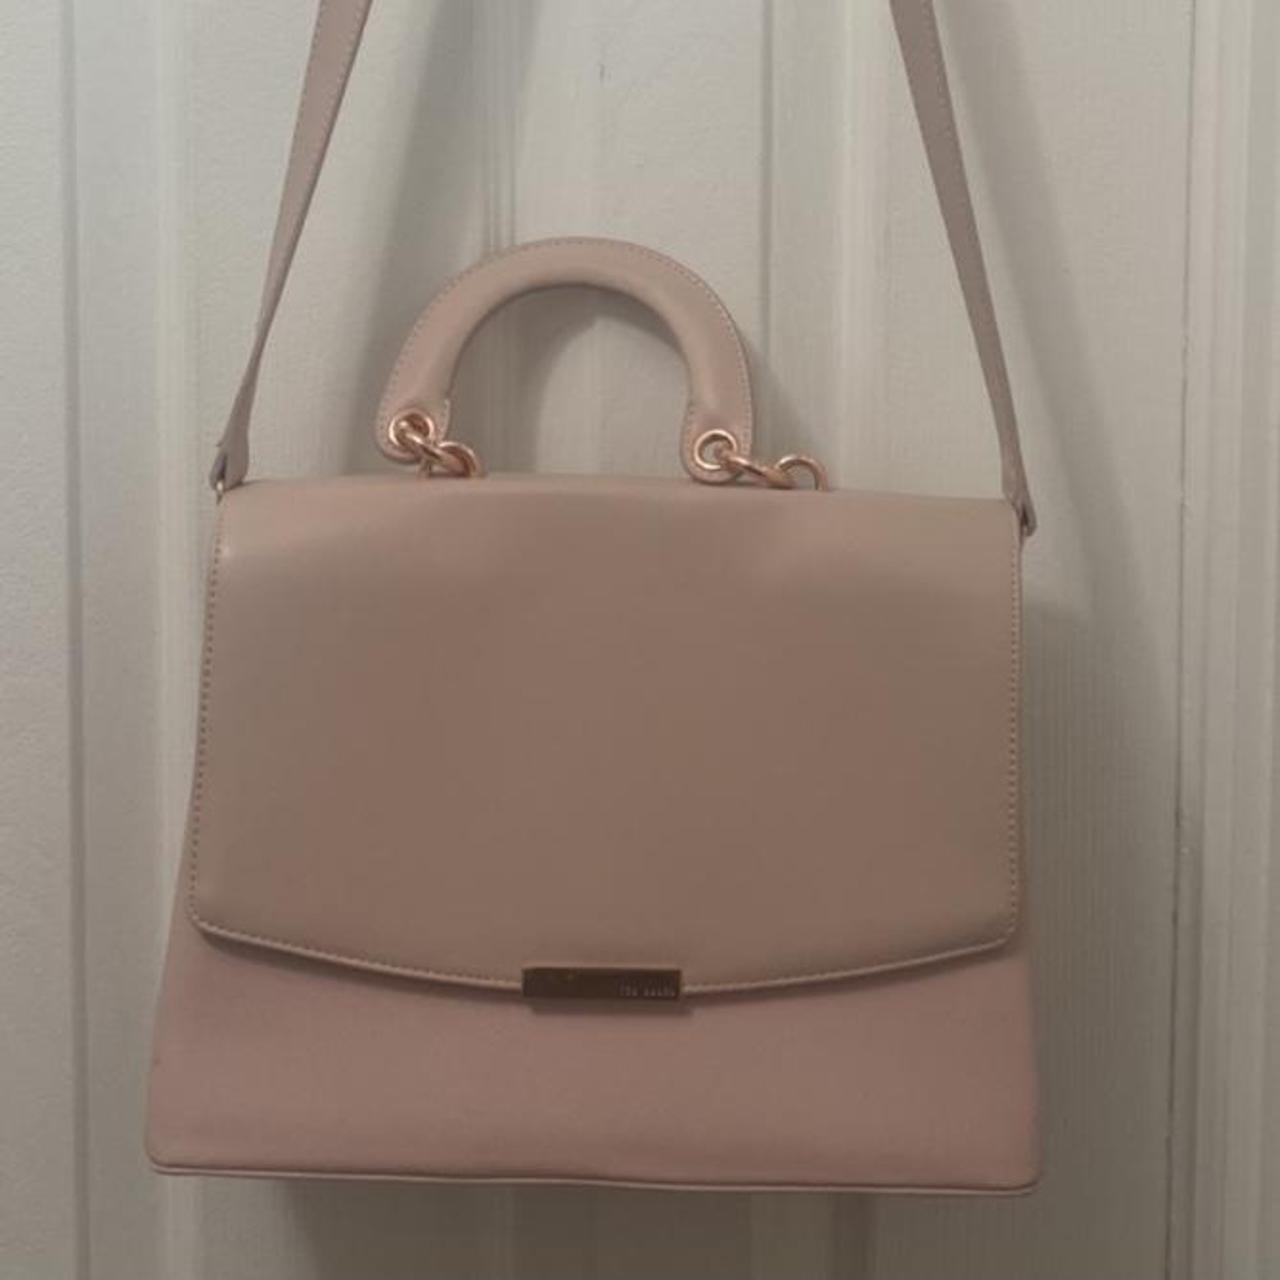 Ted Baker Pink Handbags